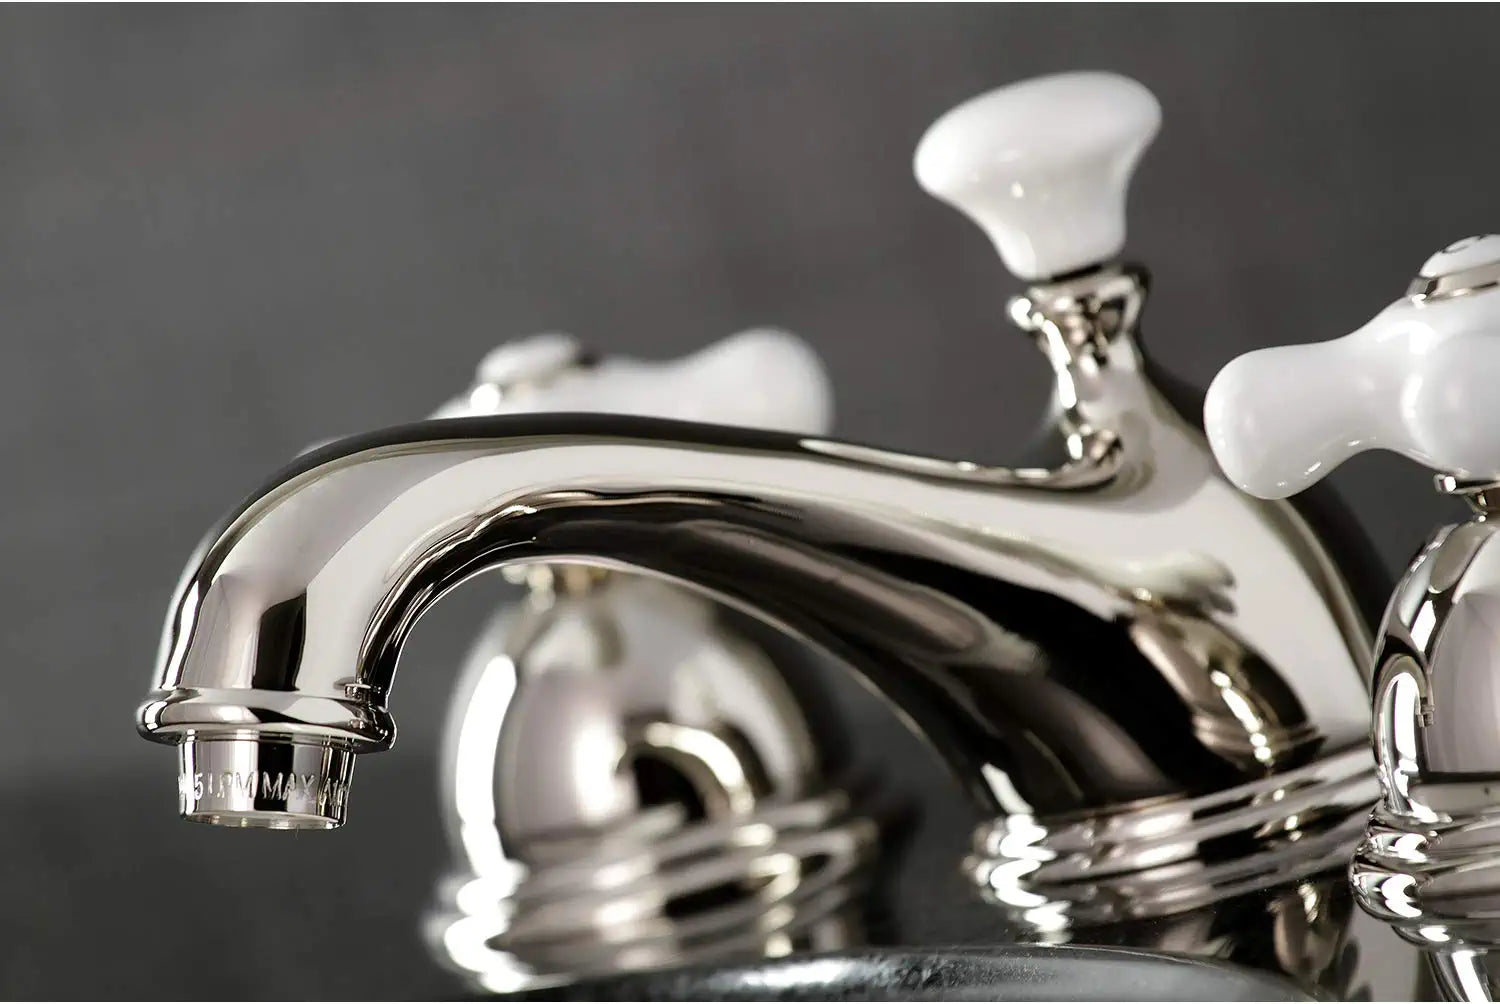 Kingston Brass KS3967PX 8 in. Widespread Bathroom Faucet, Brushed Brass